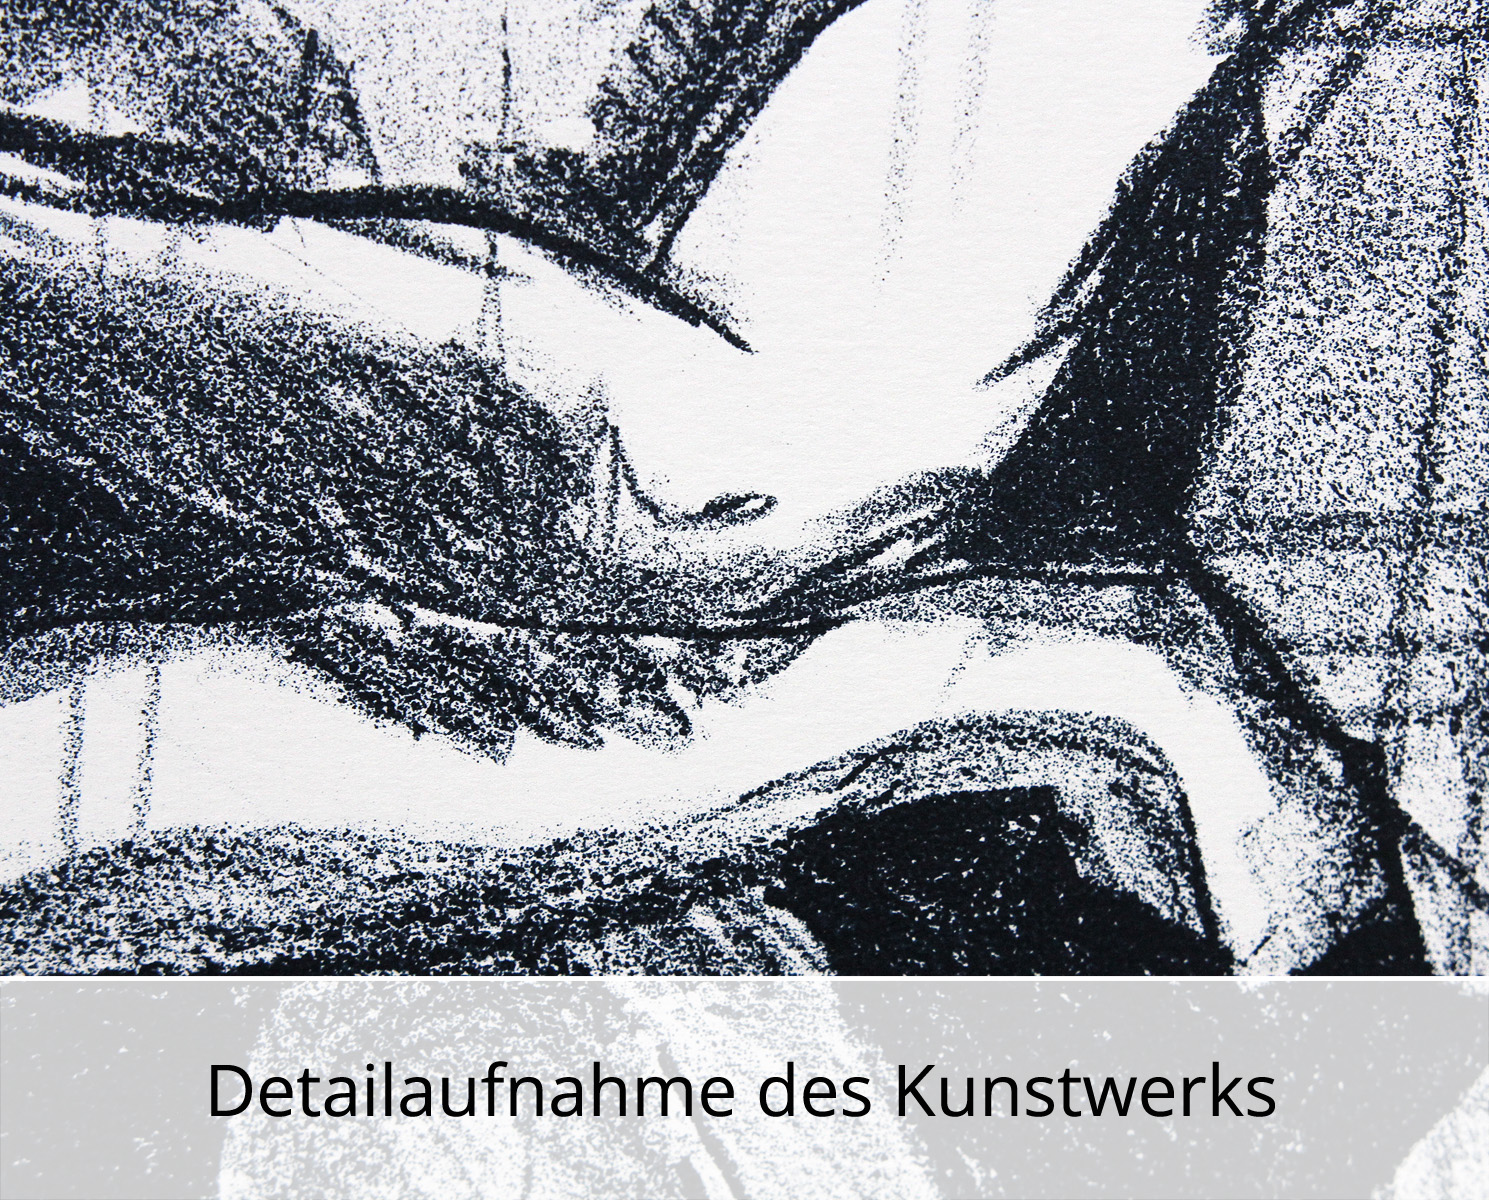 C. Blechschmidt: "Traumlos", Originale Grafik/Lithographie